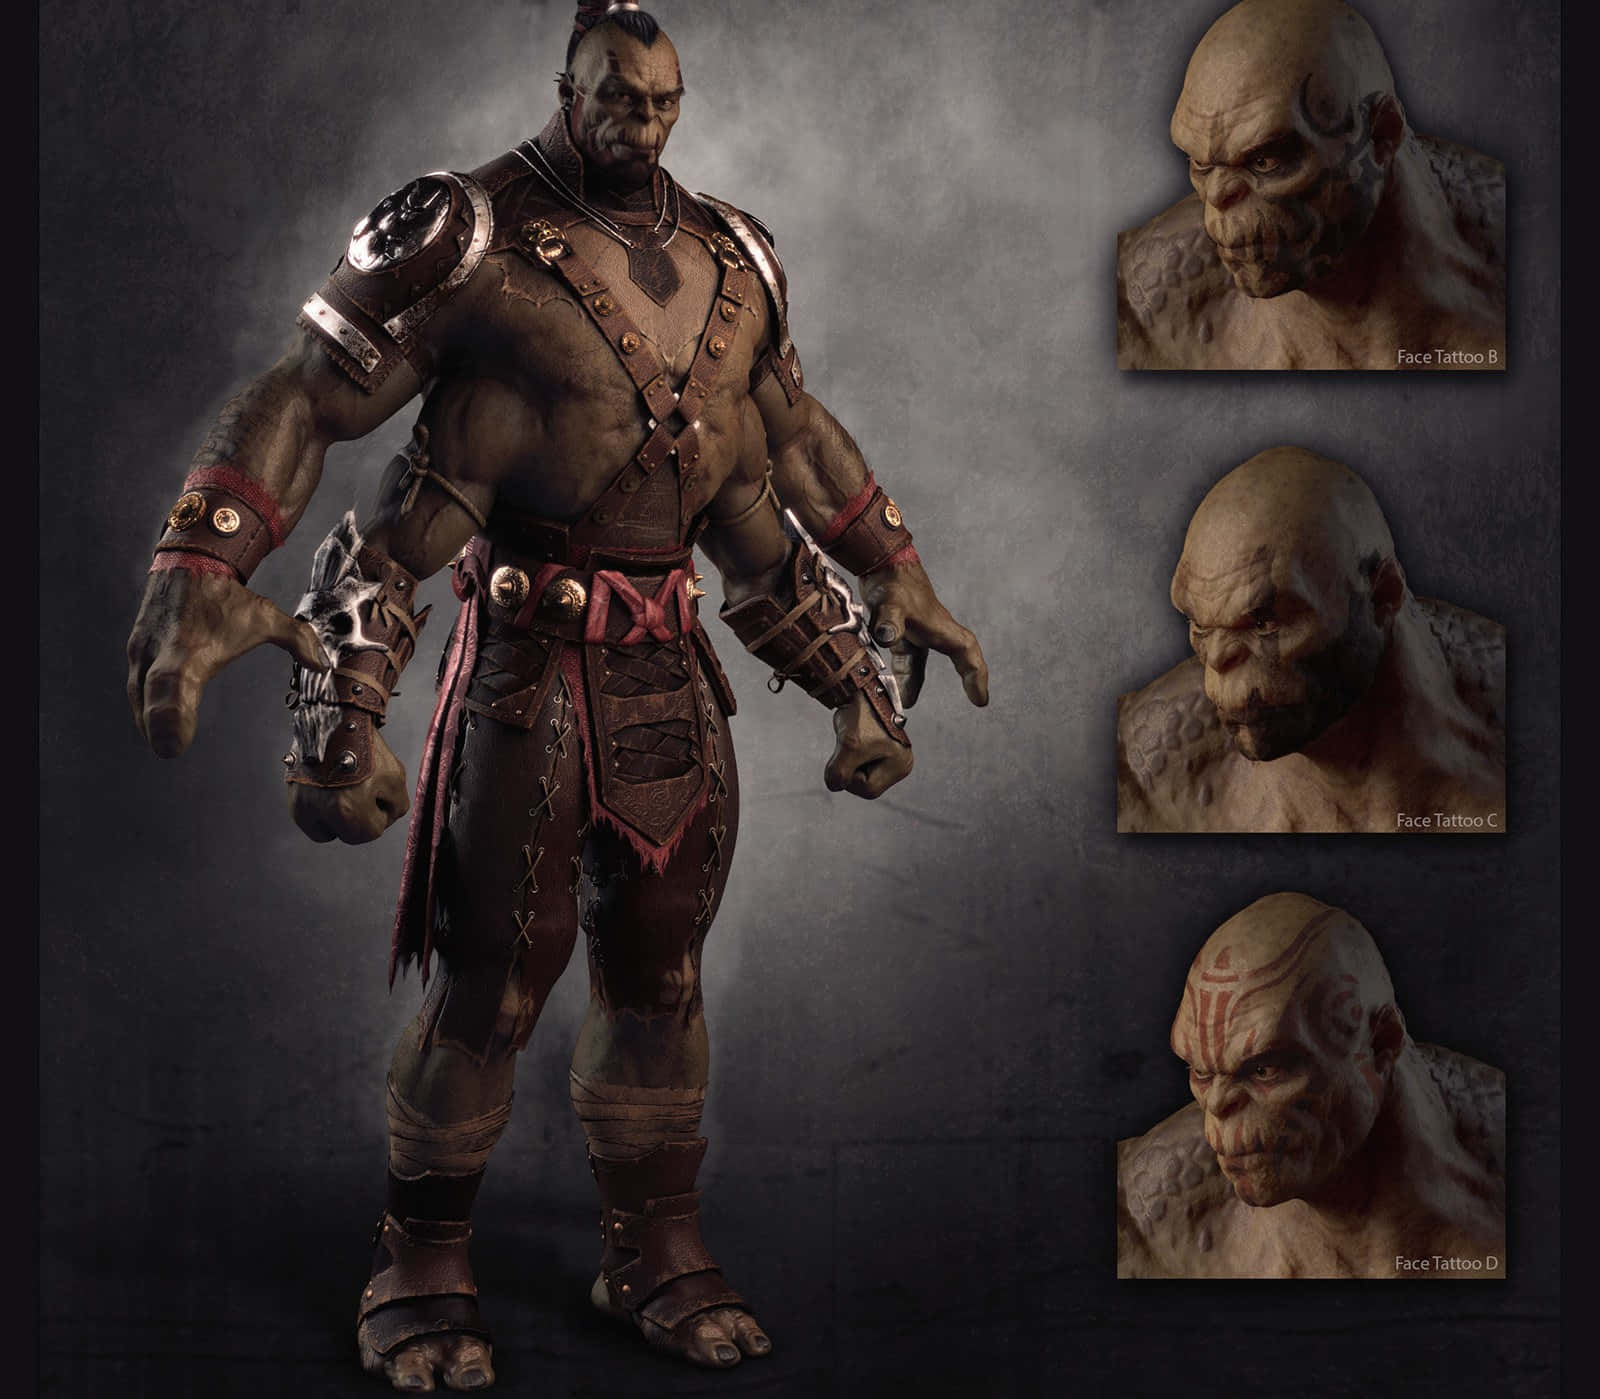 Fearsome Goro, the Mortal Kombat warrior Wallpaper